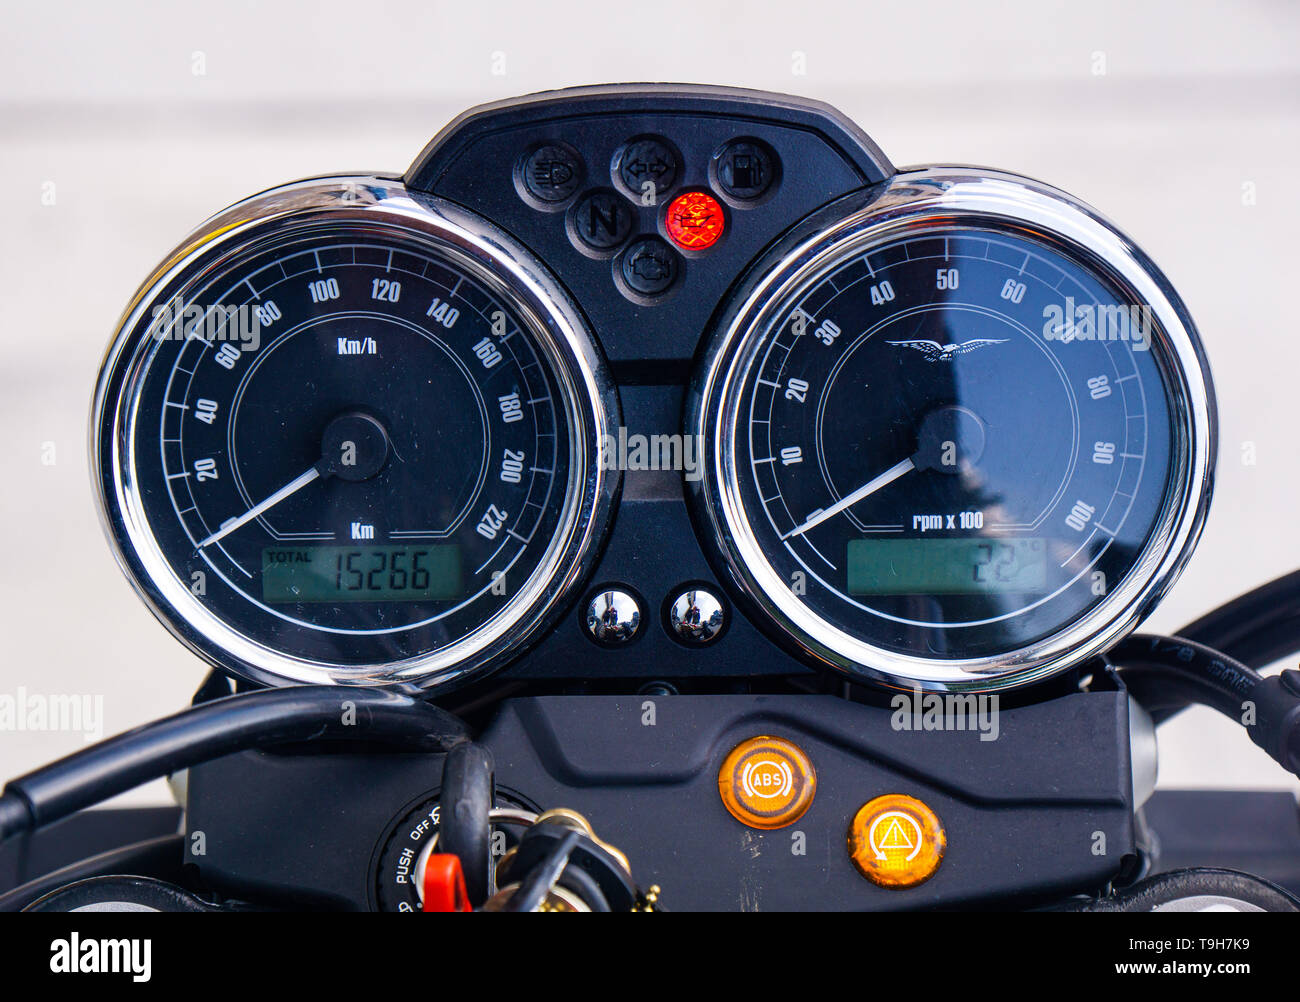 A classic instrument set up on a Motor Guzzi V7 motorcycle Stock Photo